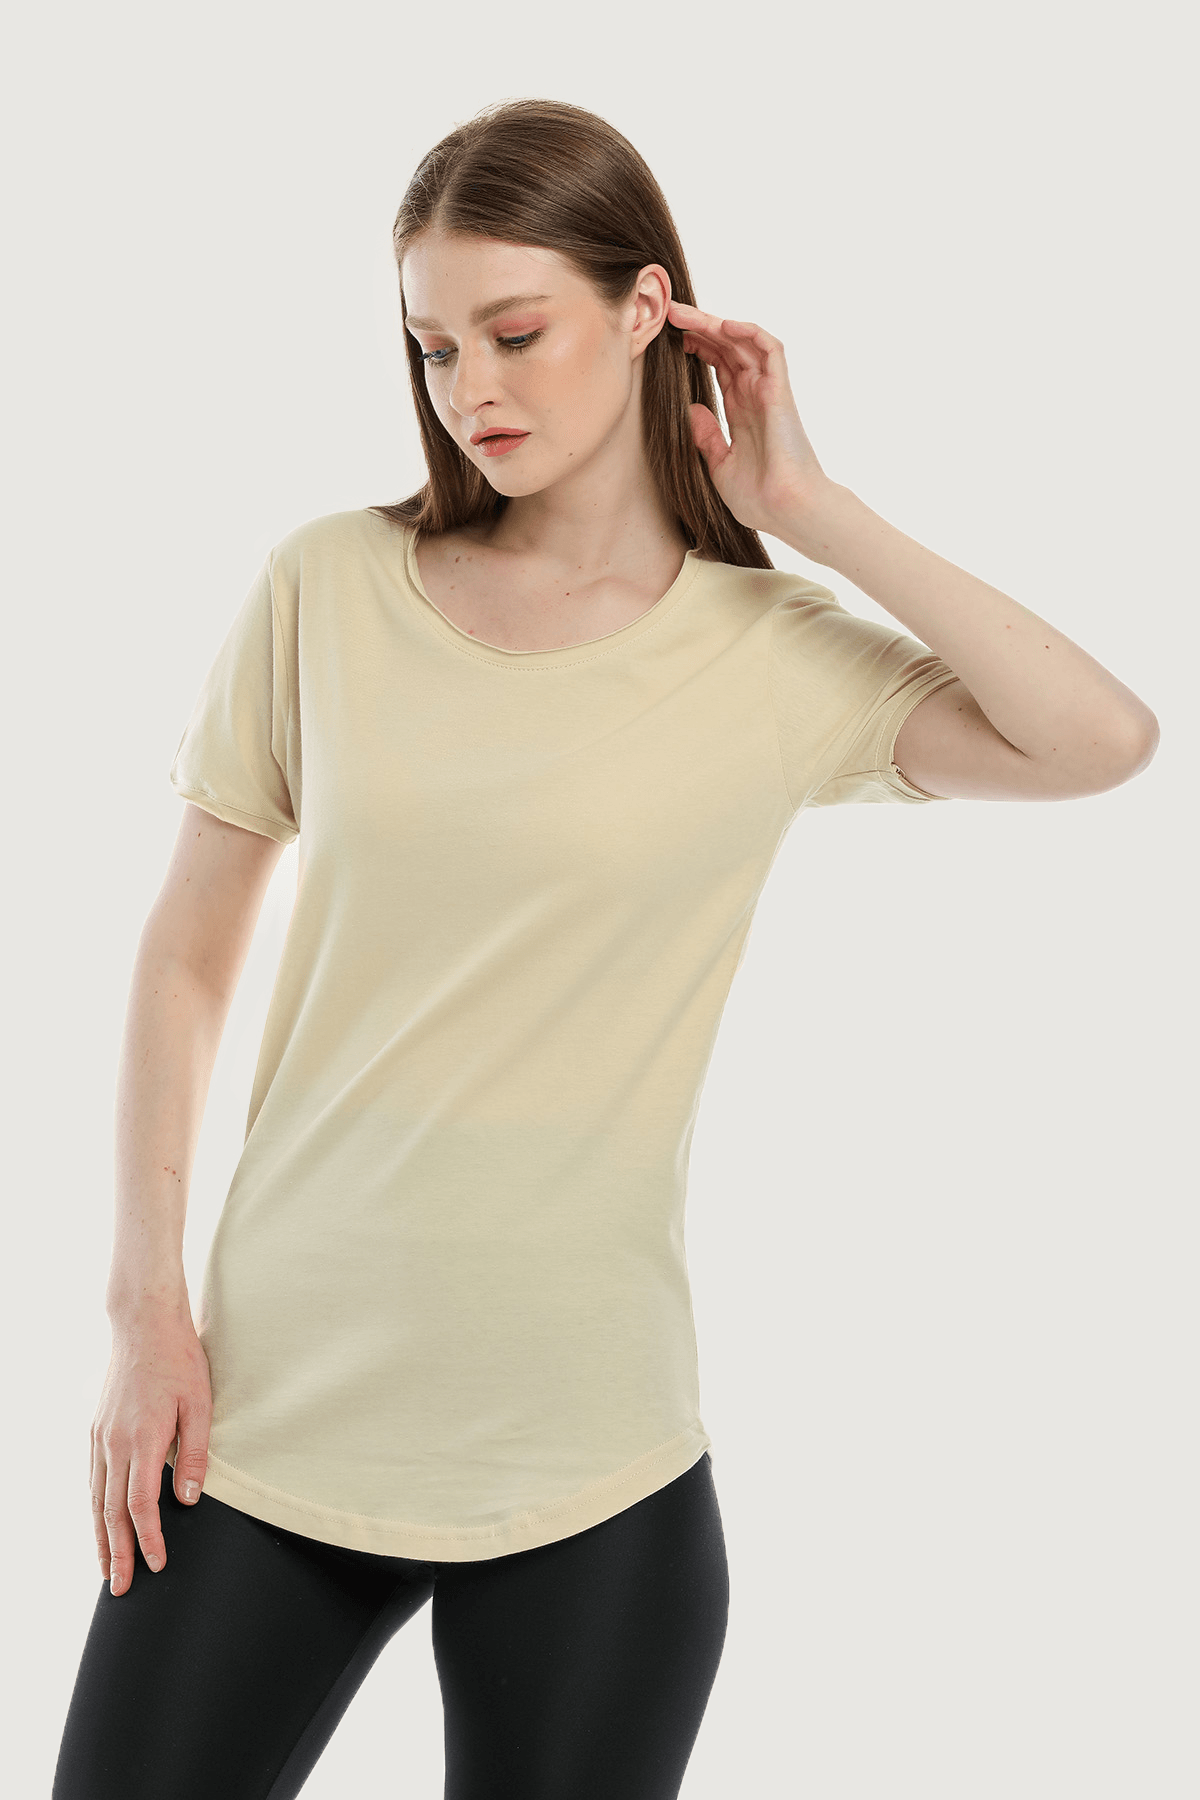 Women's White Loose Casual Cut Basic T-shirt - Cream